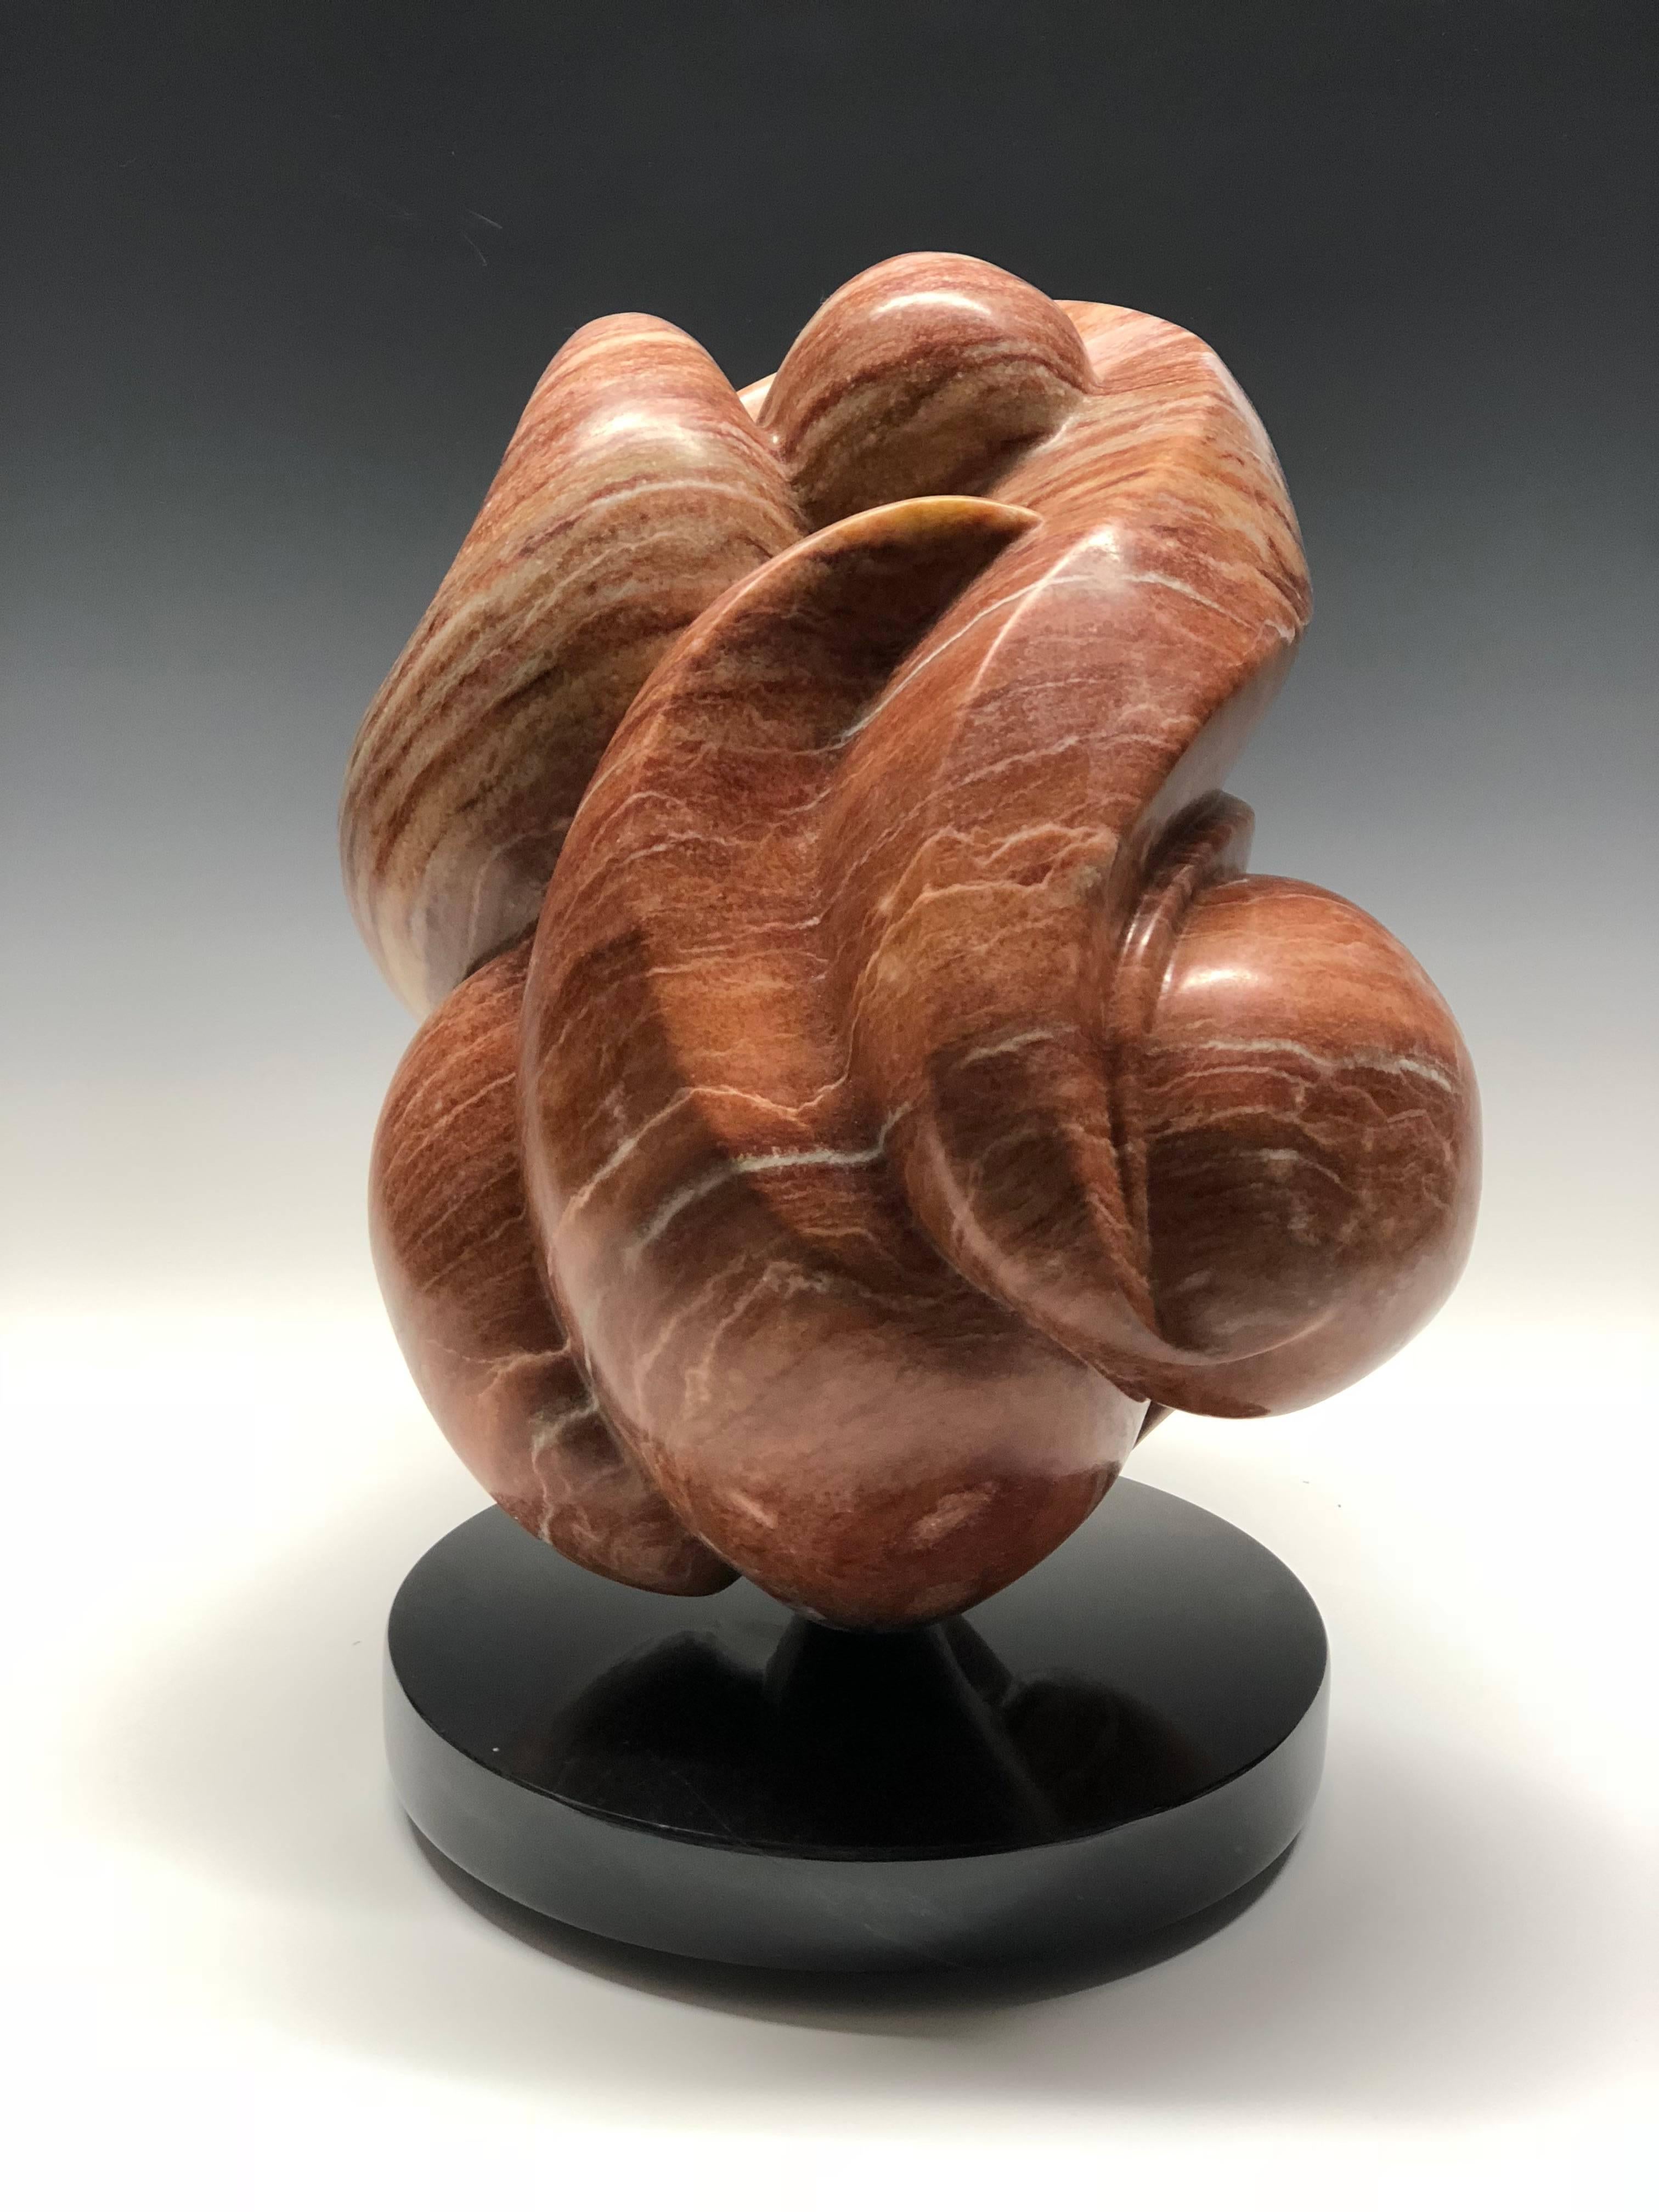 Zaftig - Sculpture by Elisa Adams